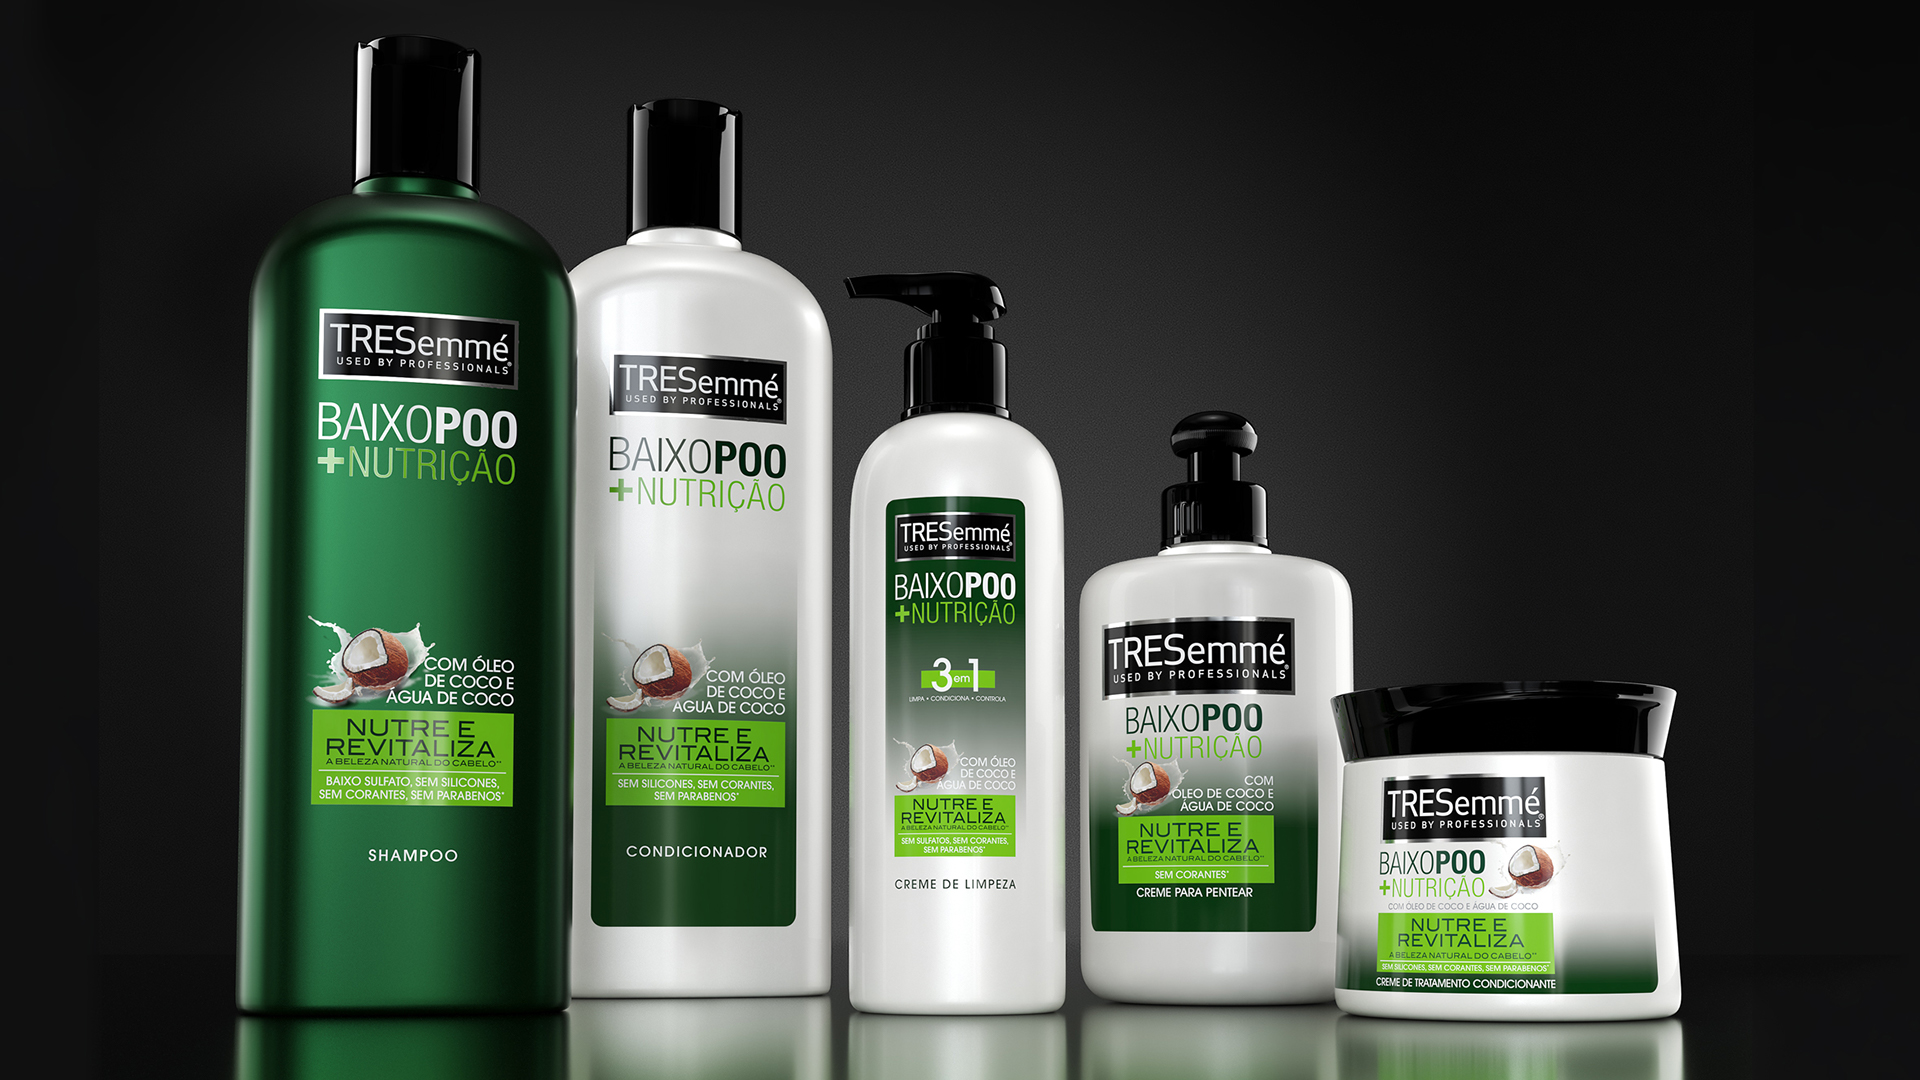 3D Packshot Photography product shampoo Tresemme.